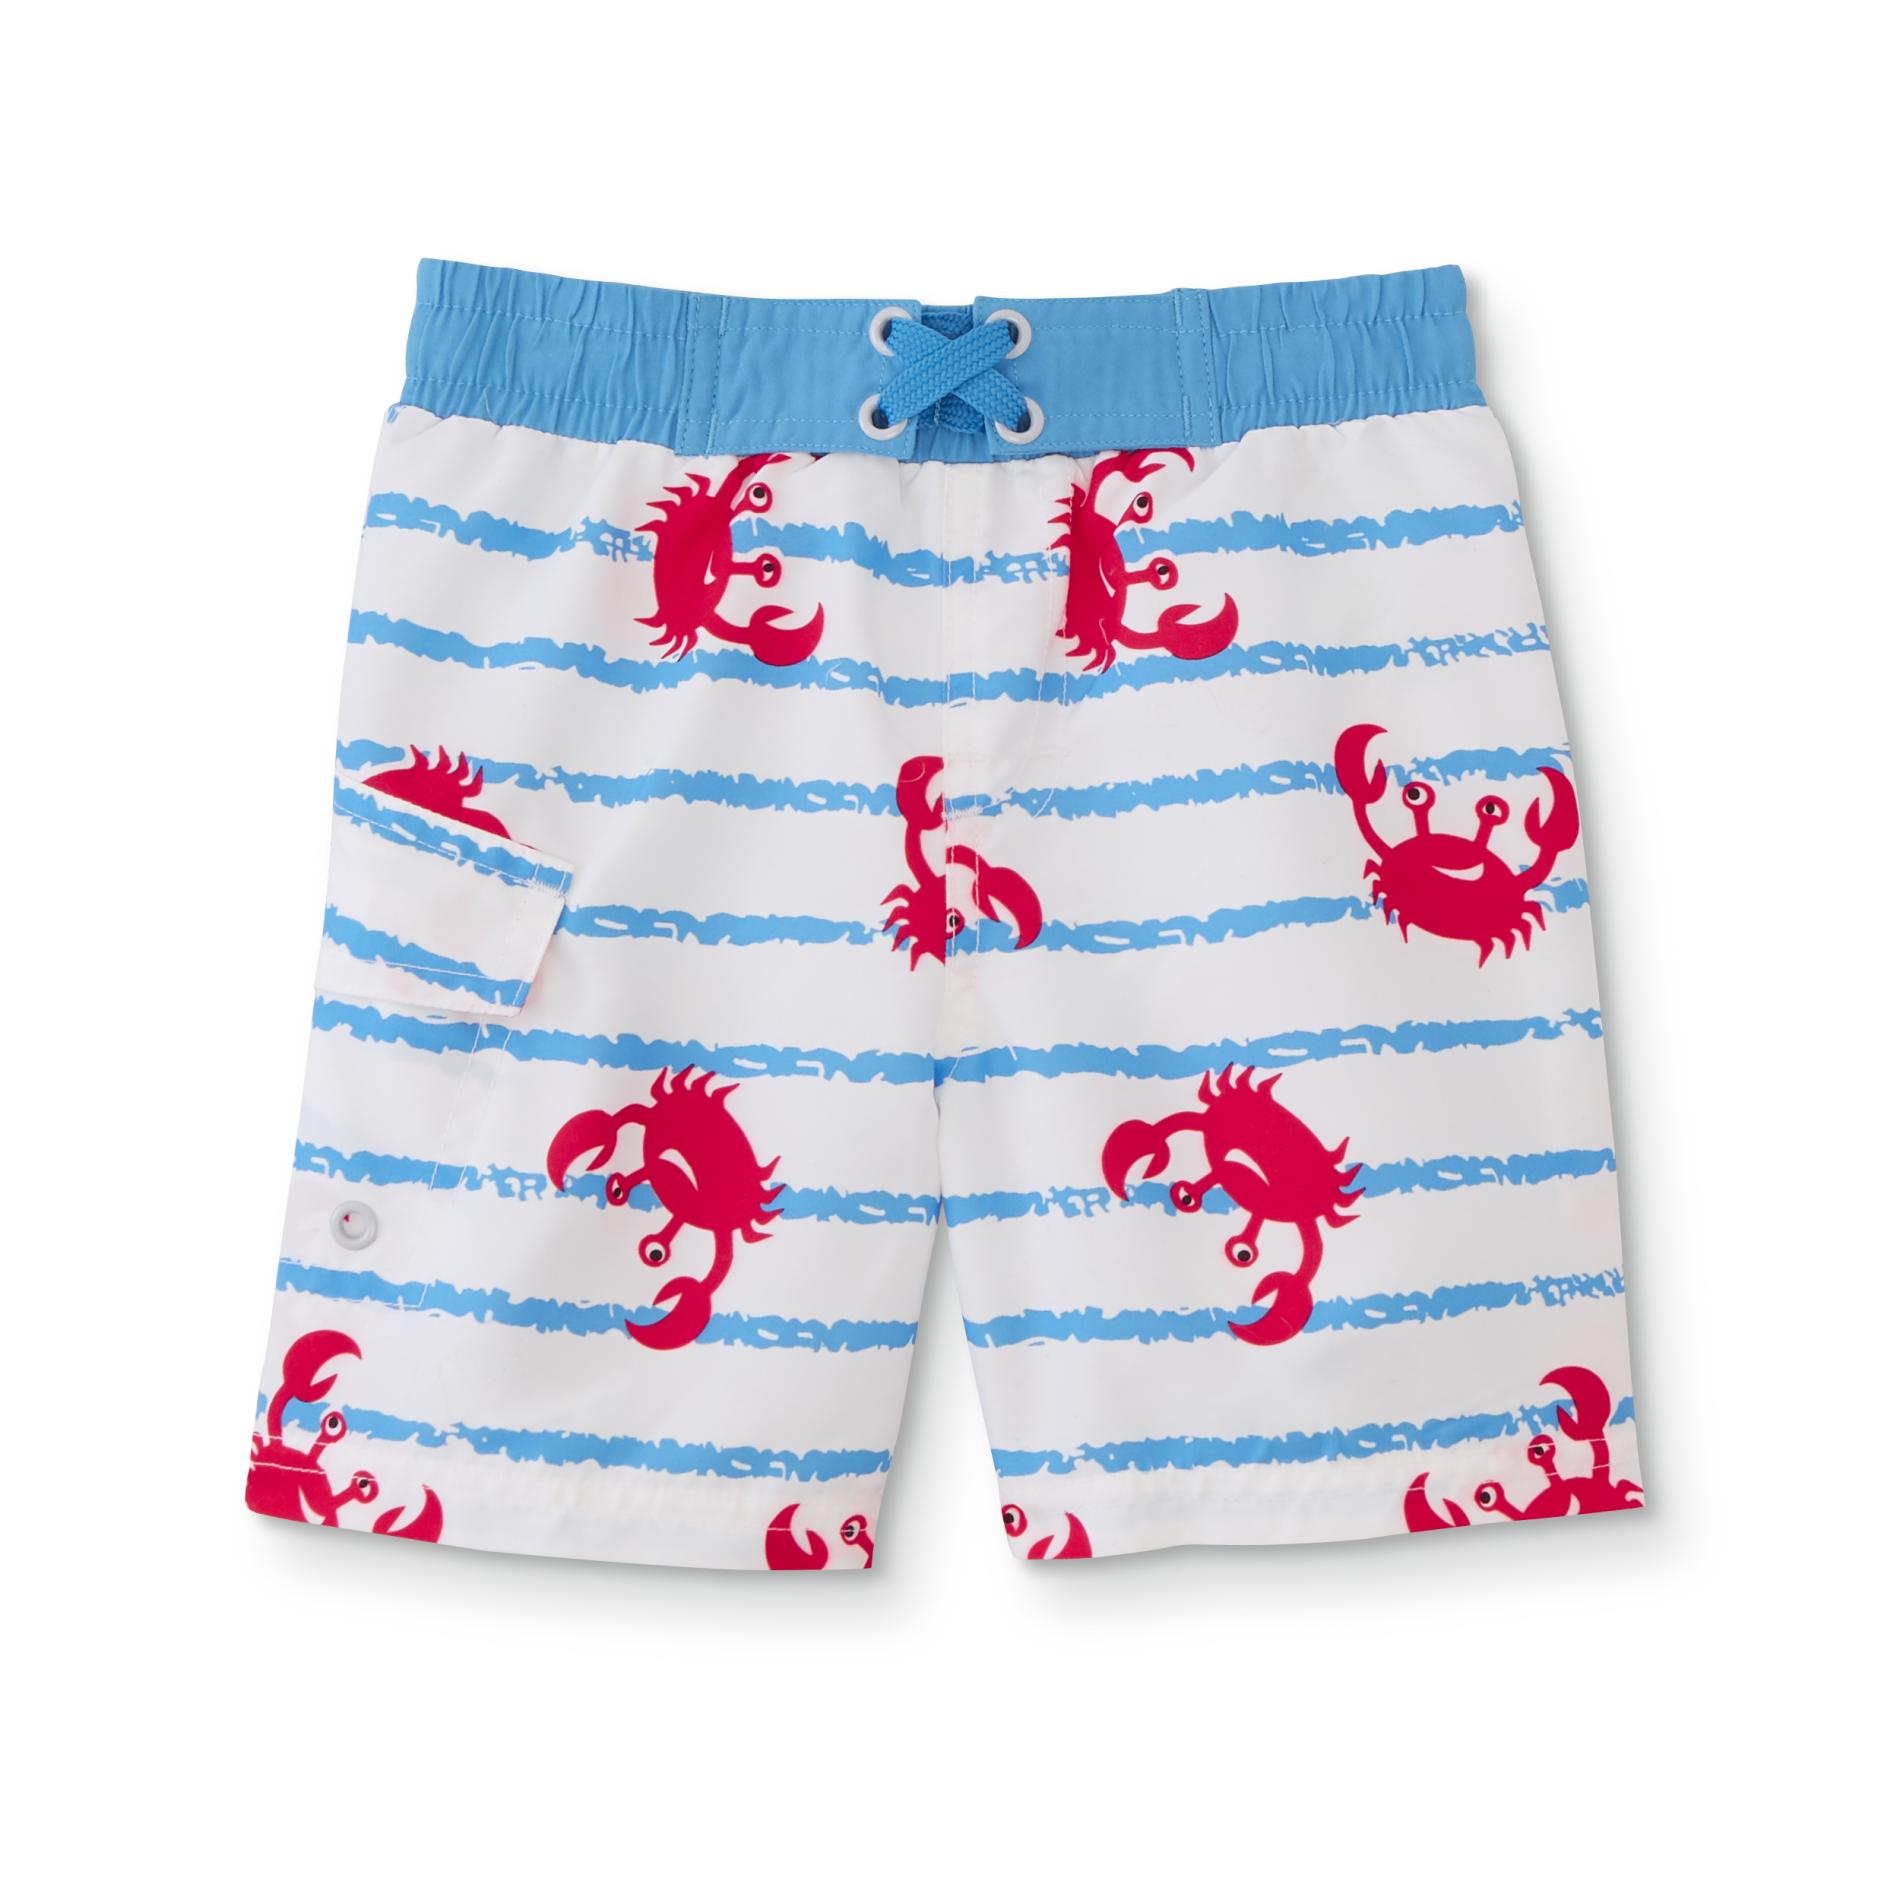 Simply Styled Infant & Toddler Boys' Swim Boardshorts - Crab